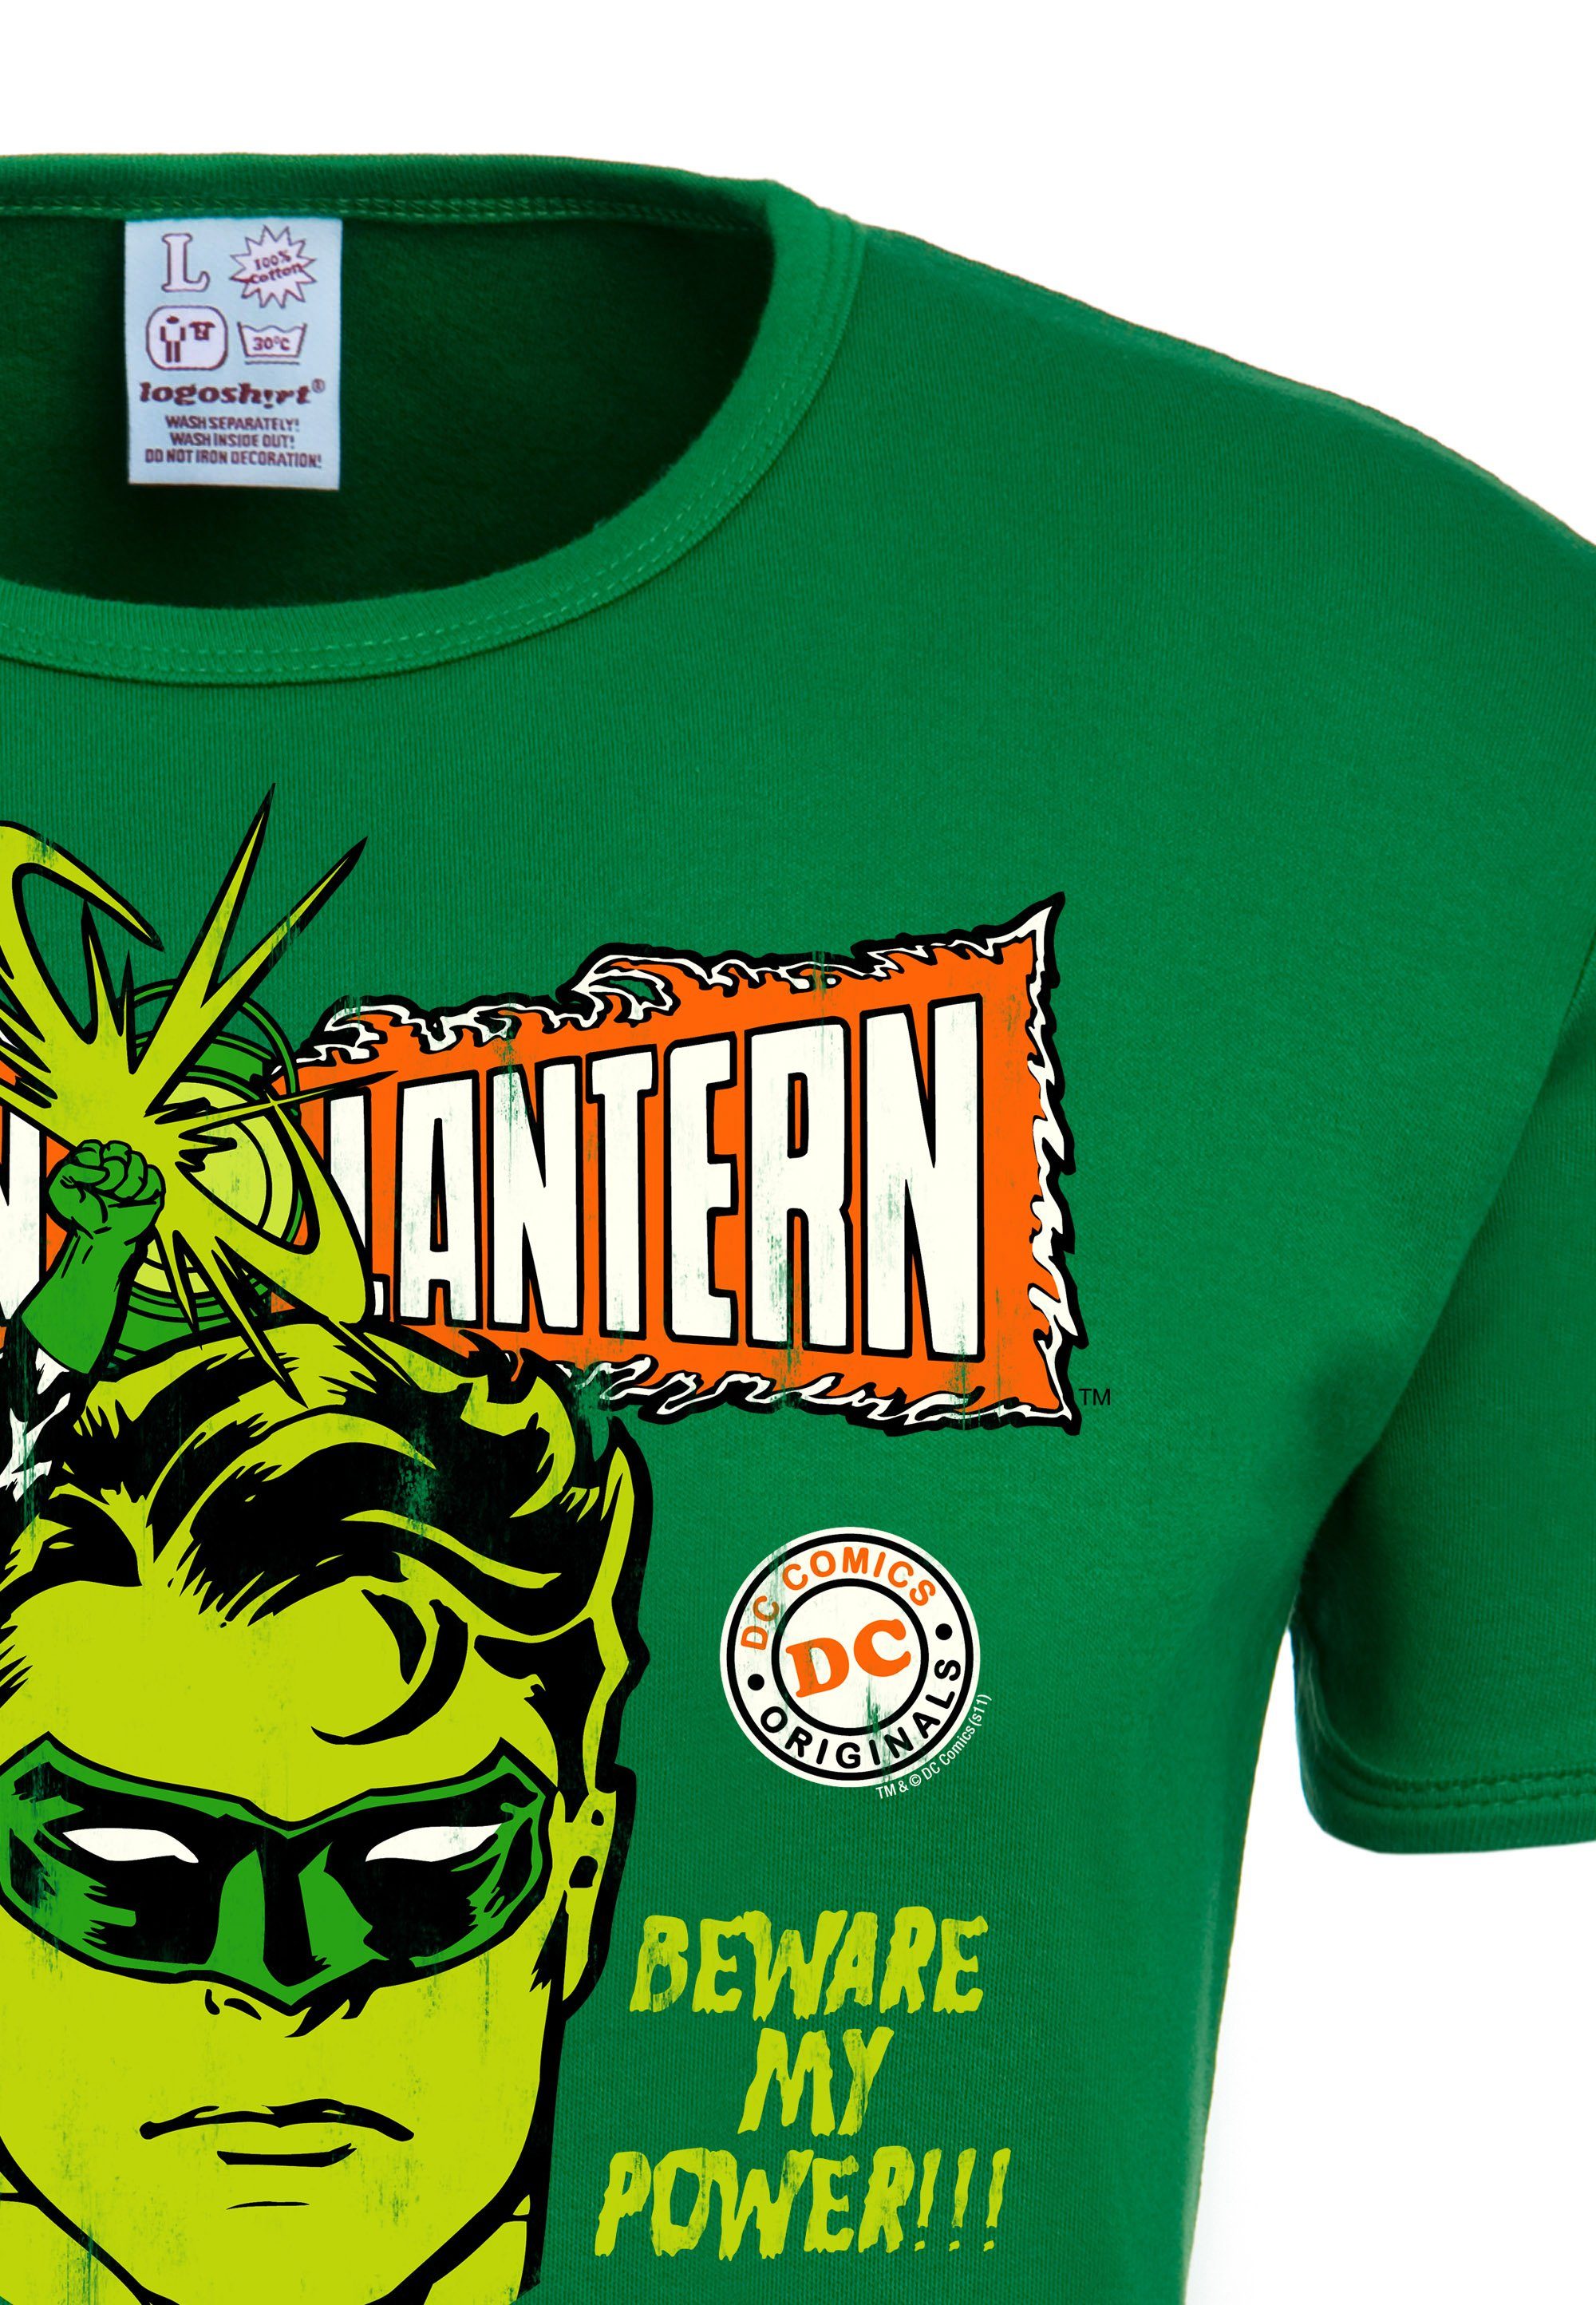 Power Heldenmotiv klassichem mit Green grün LOGOSHIRT T-Shirt Lantern